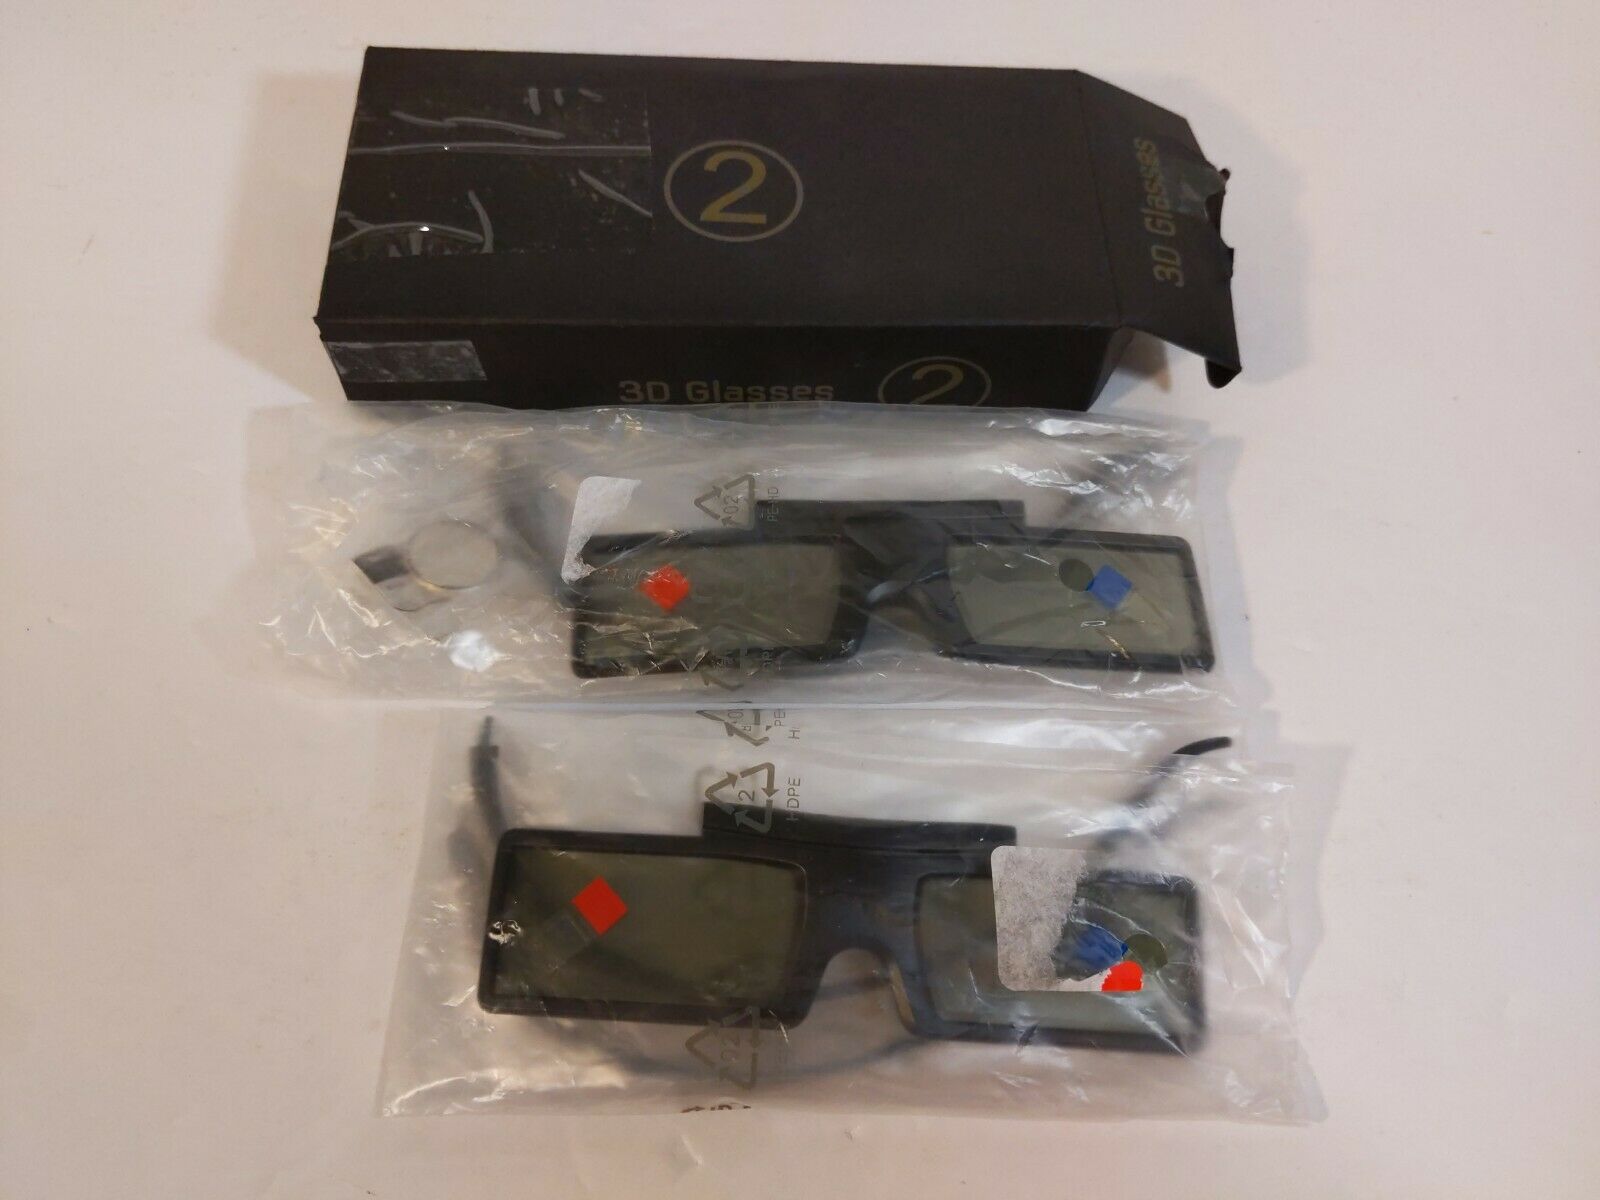 Samsung Ssg-4100gb *qty 2* Black 3d Active Glasses For 2012 3d Hdtv’s